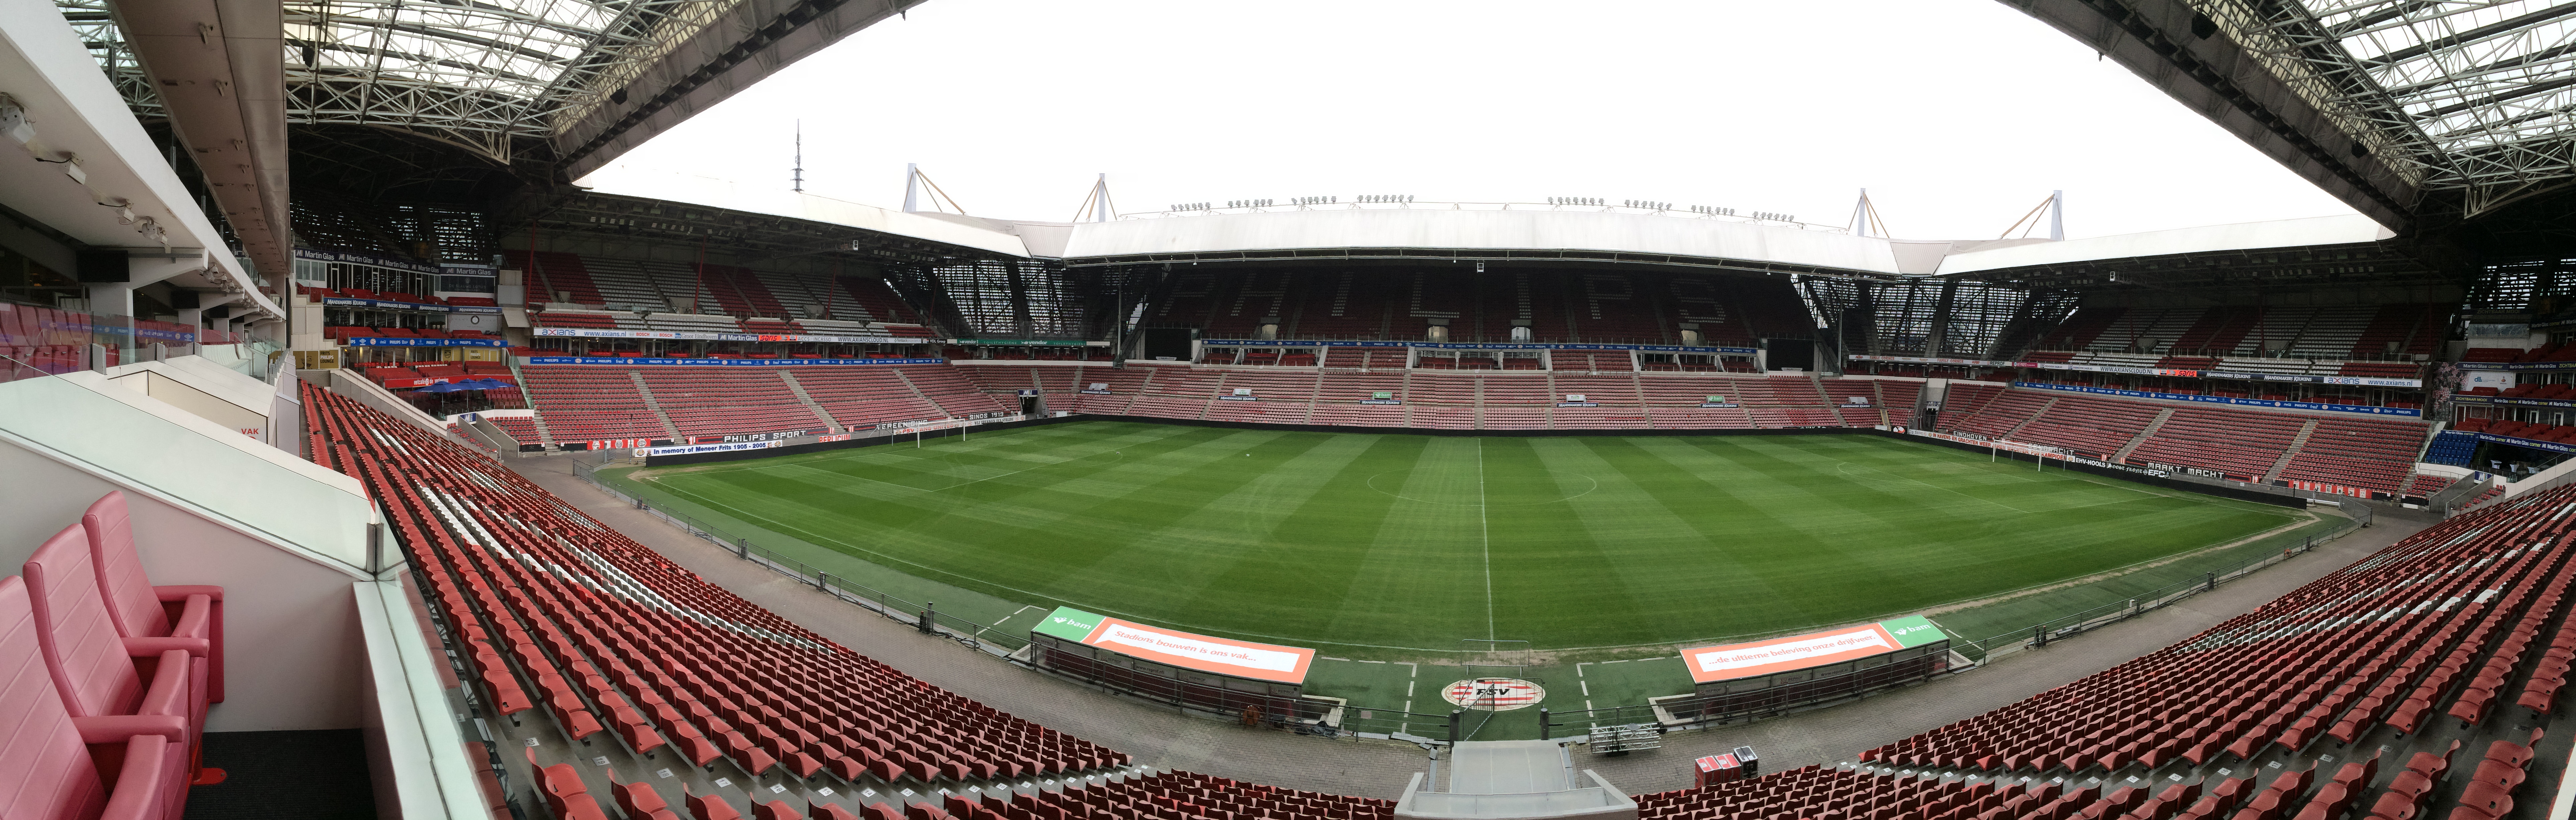 Eerste jubileumactiviteit - panorama Philips stadion